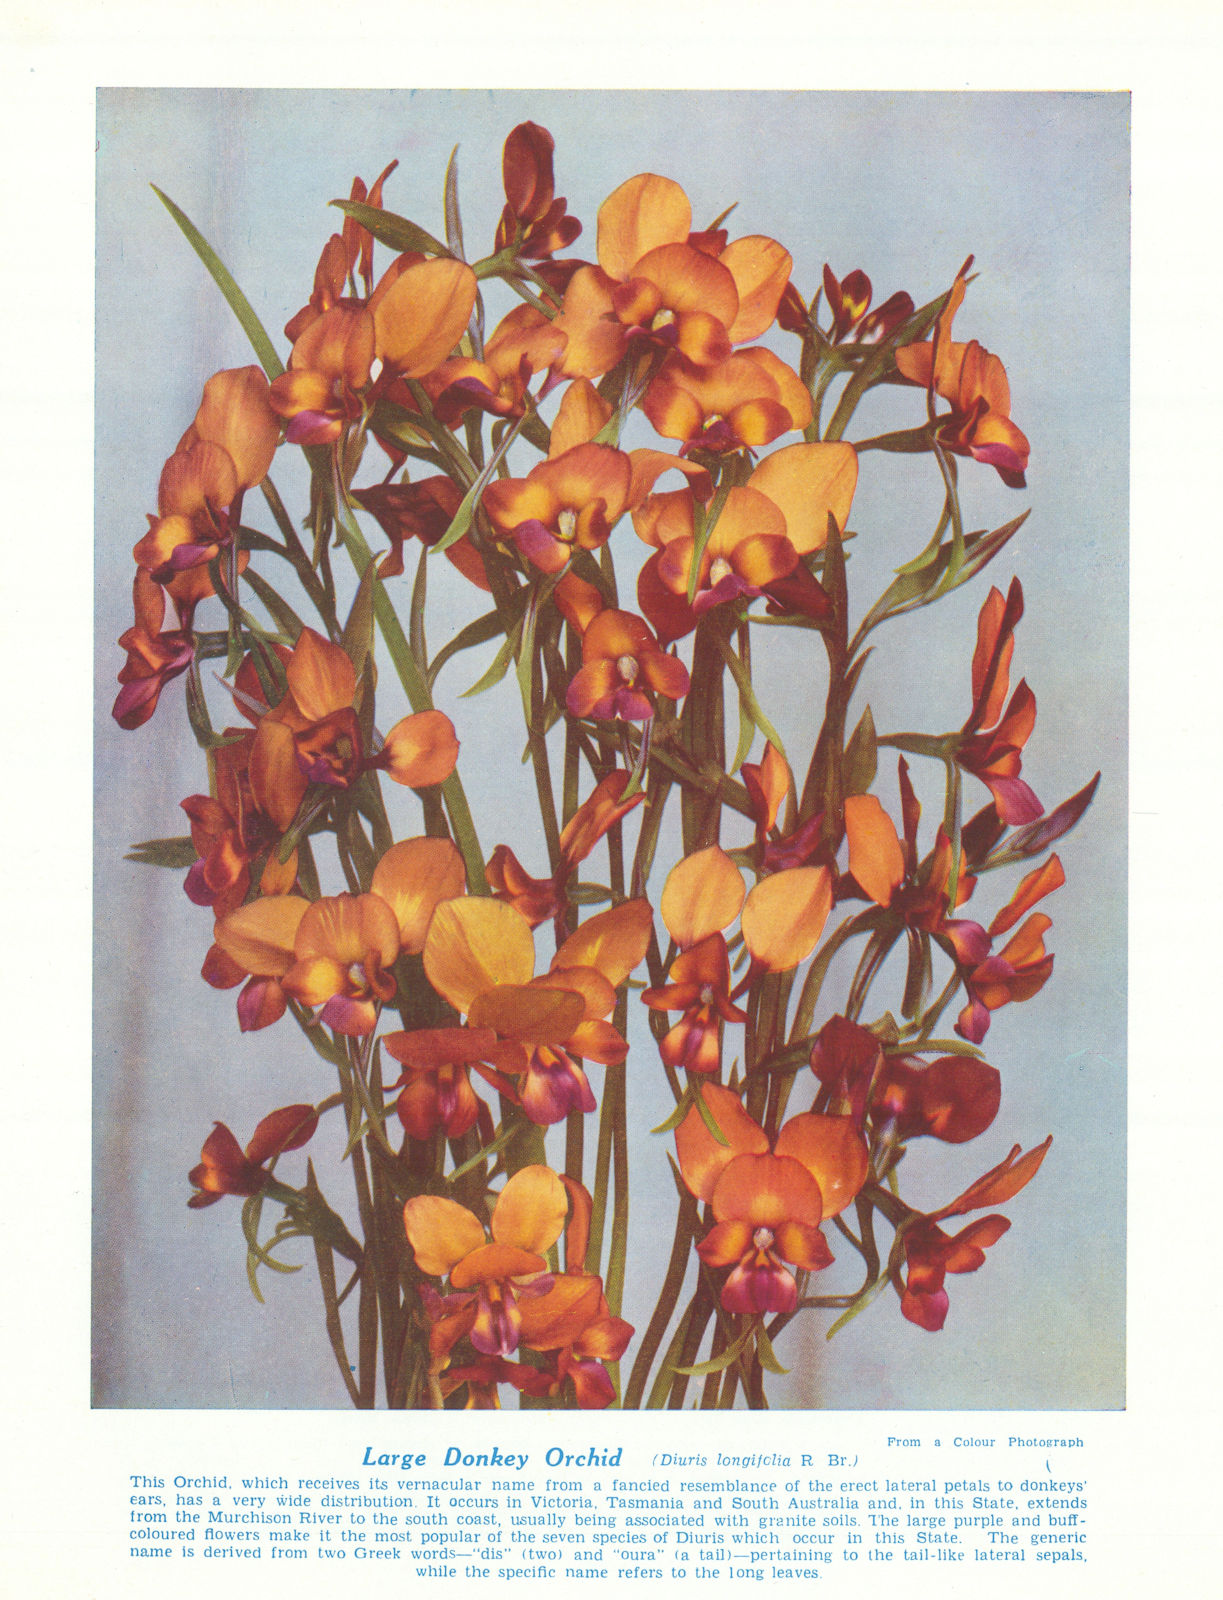 Donkey Orchid, Large (Diuris longifolia). West Australian Wild Flowers 1950